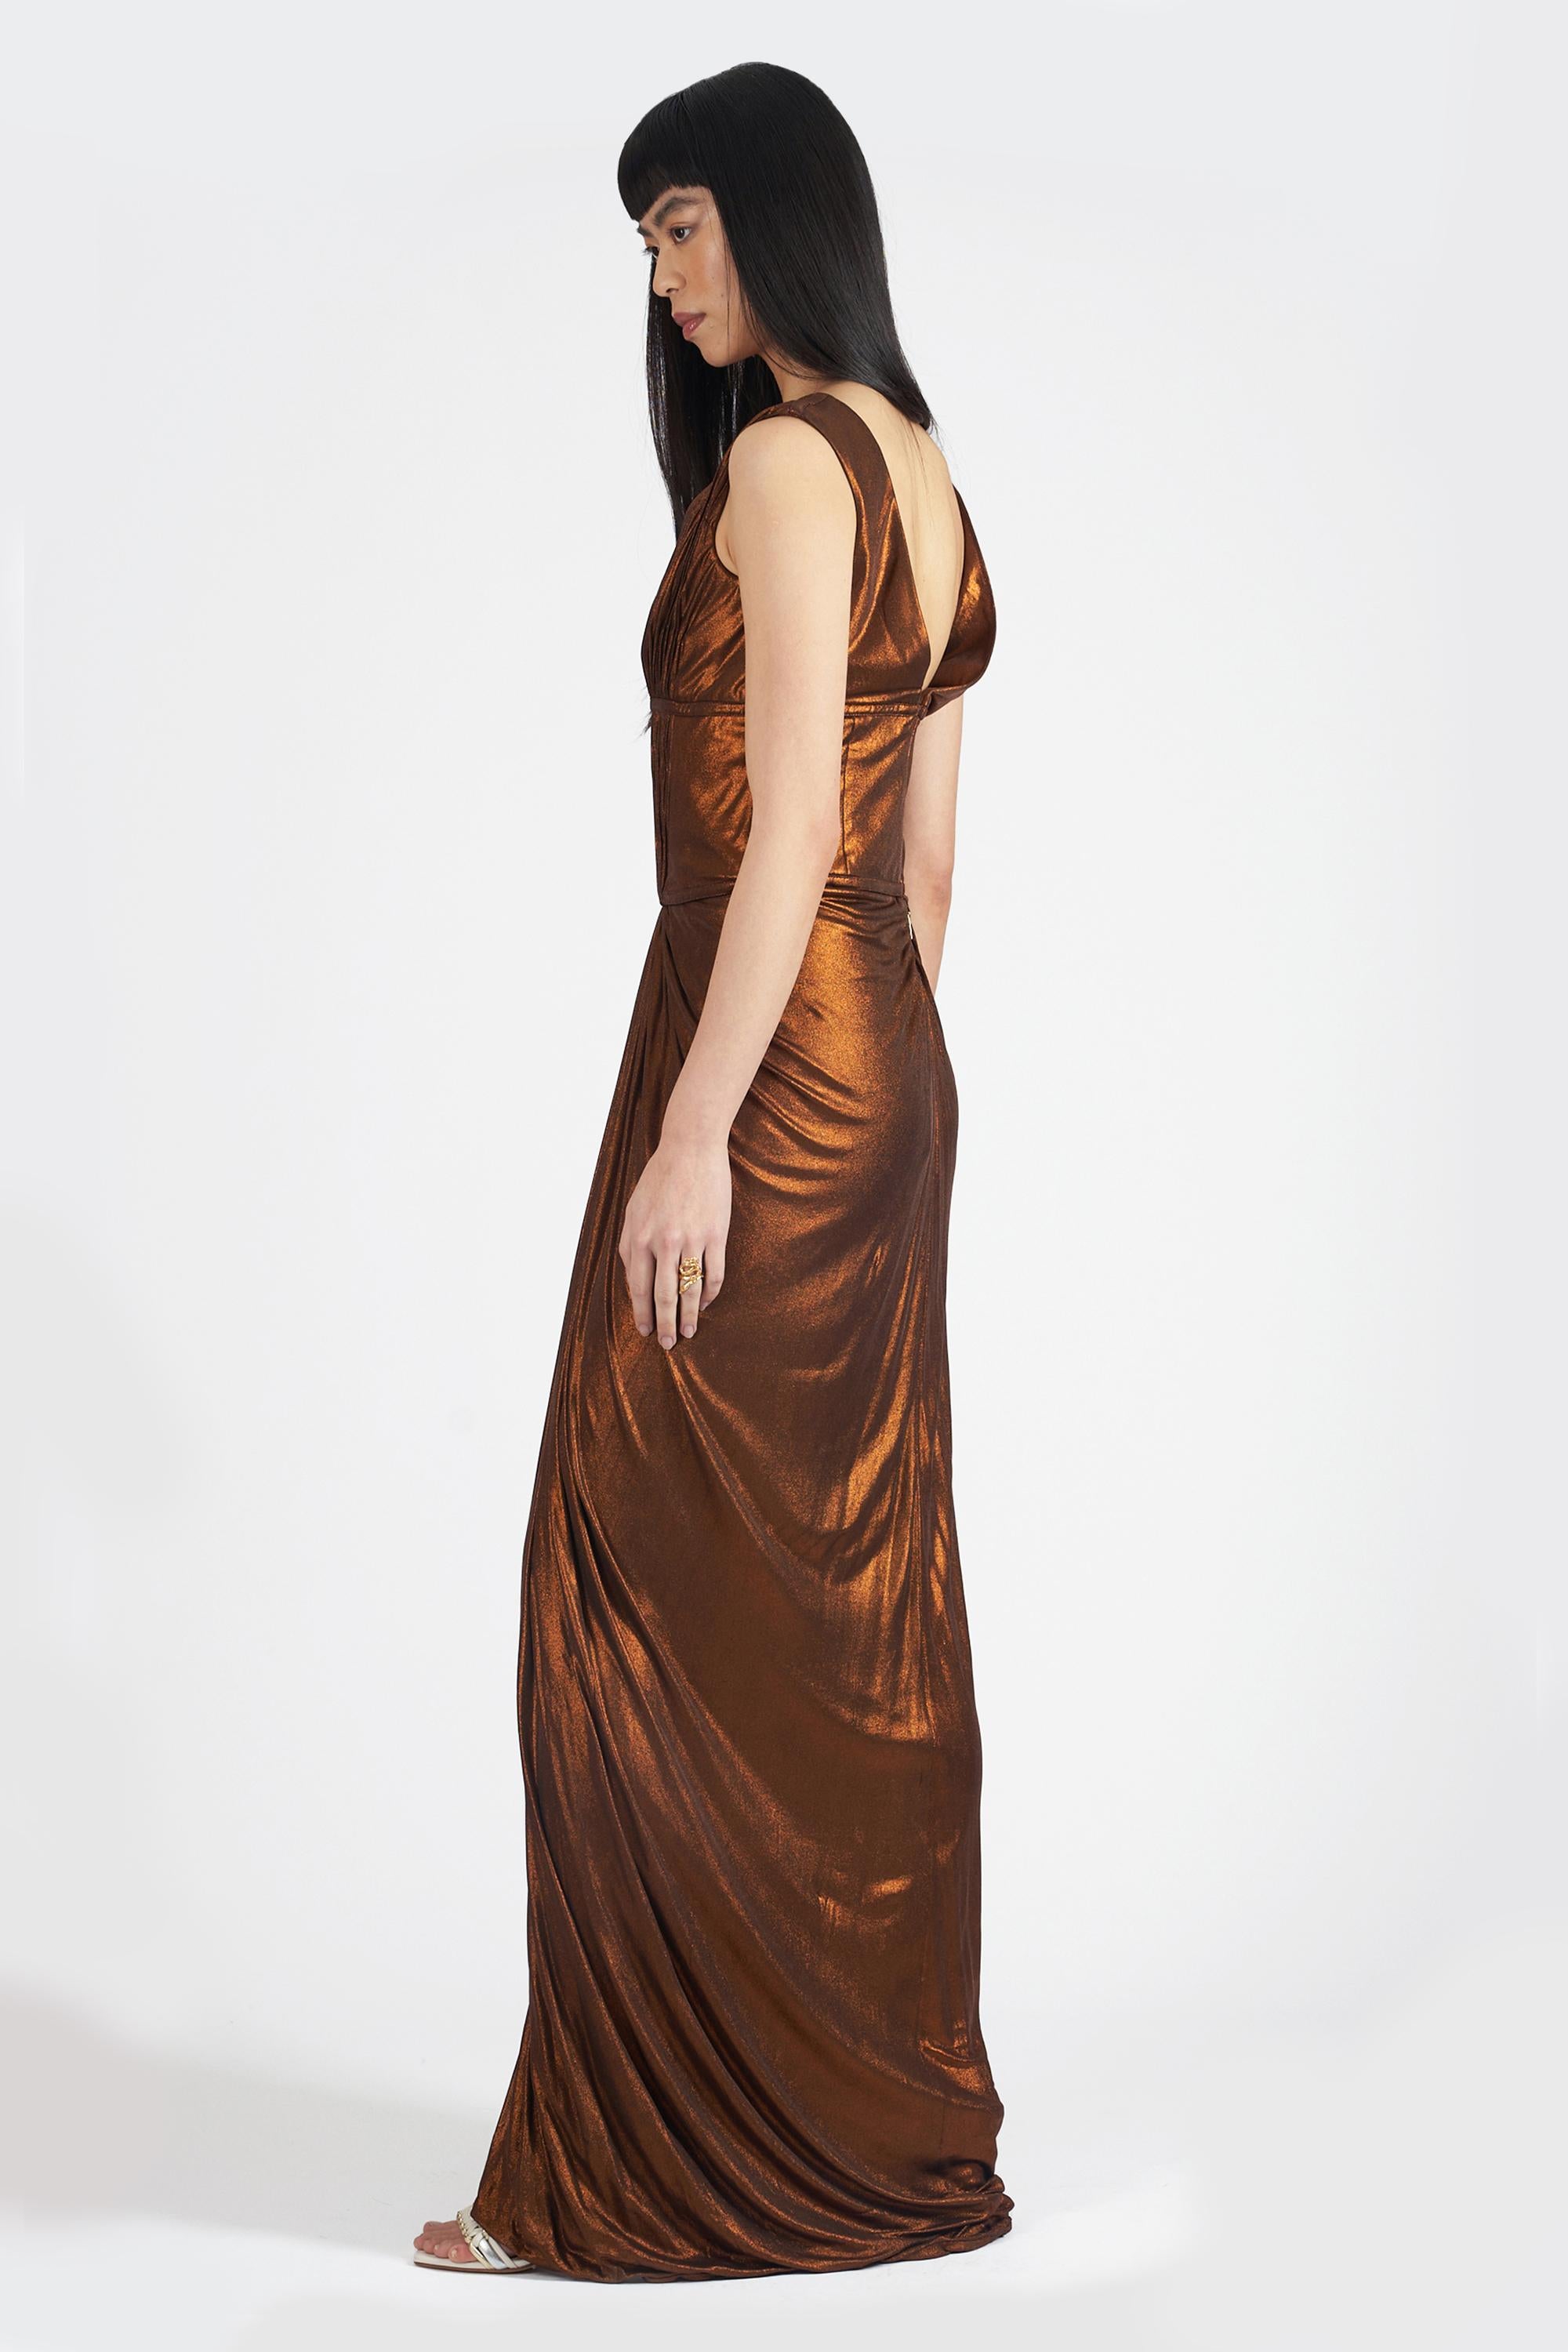 Roberto Cavalli F/W 2007 Copper Metallic Gown In Good Condition For Sale In London, GB